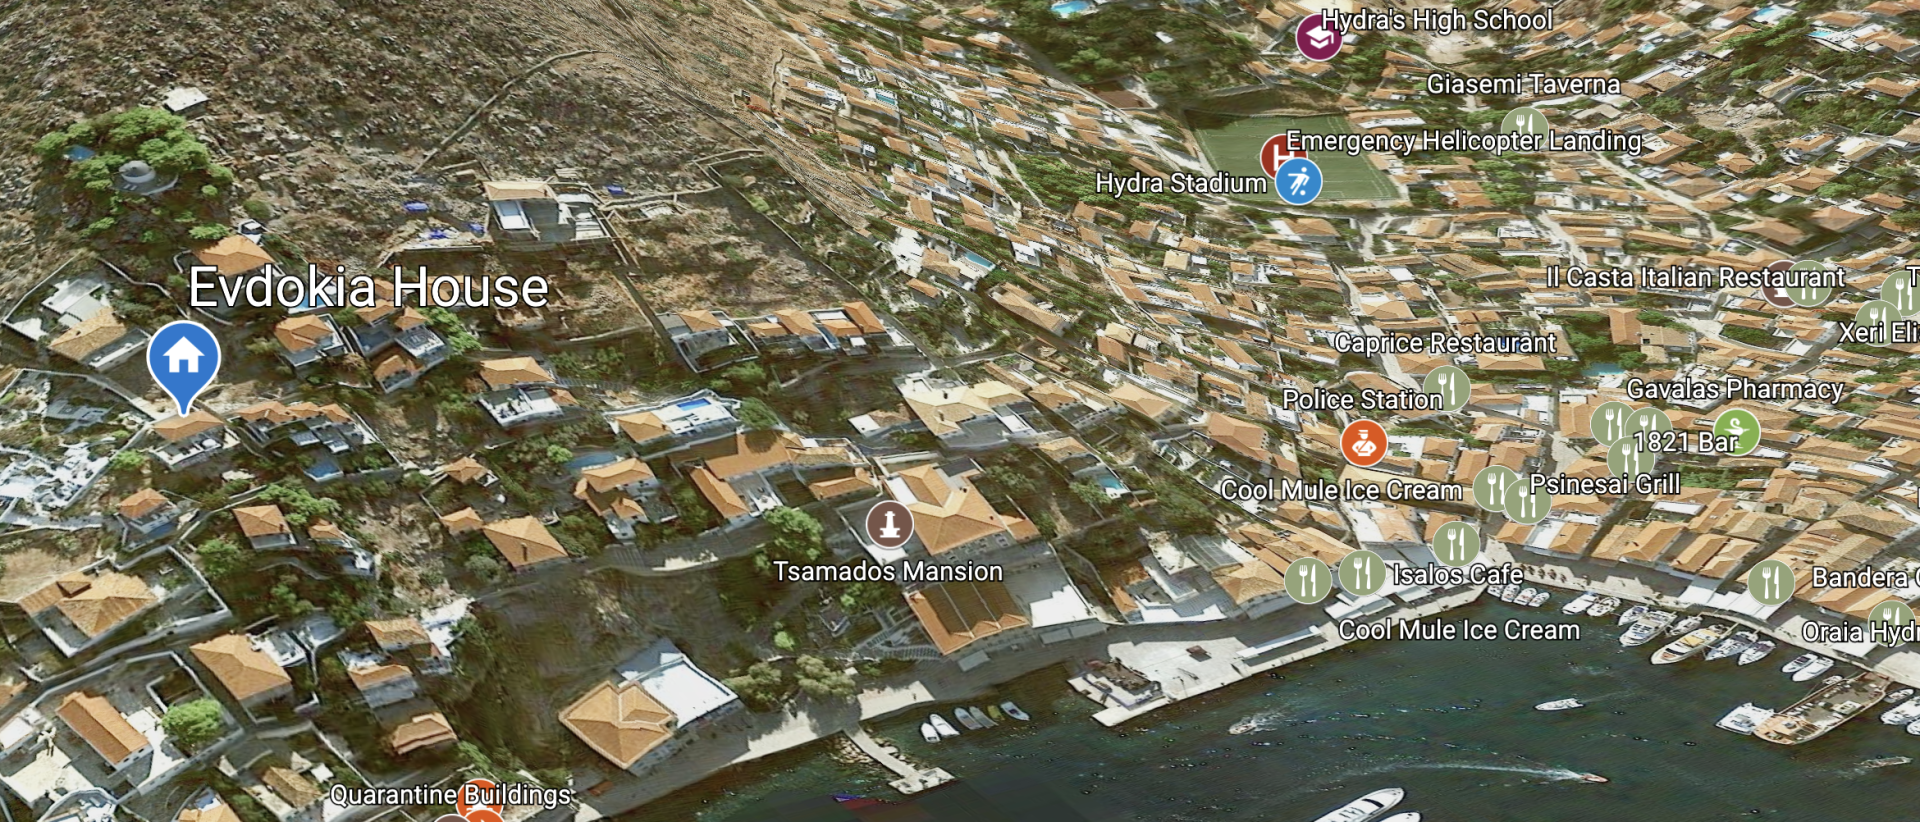 Location Map for Evdokia House on Hydra Island Greece